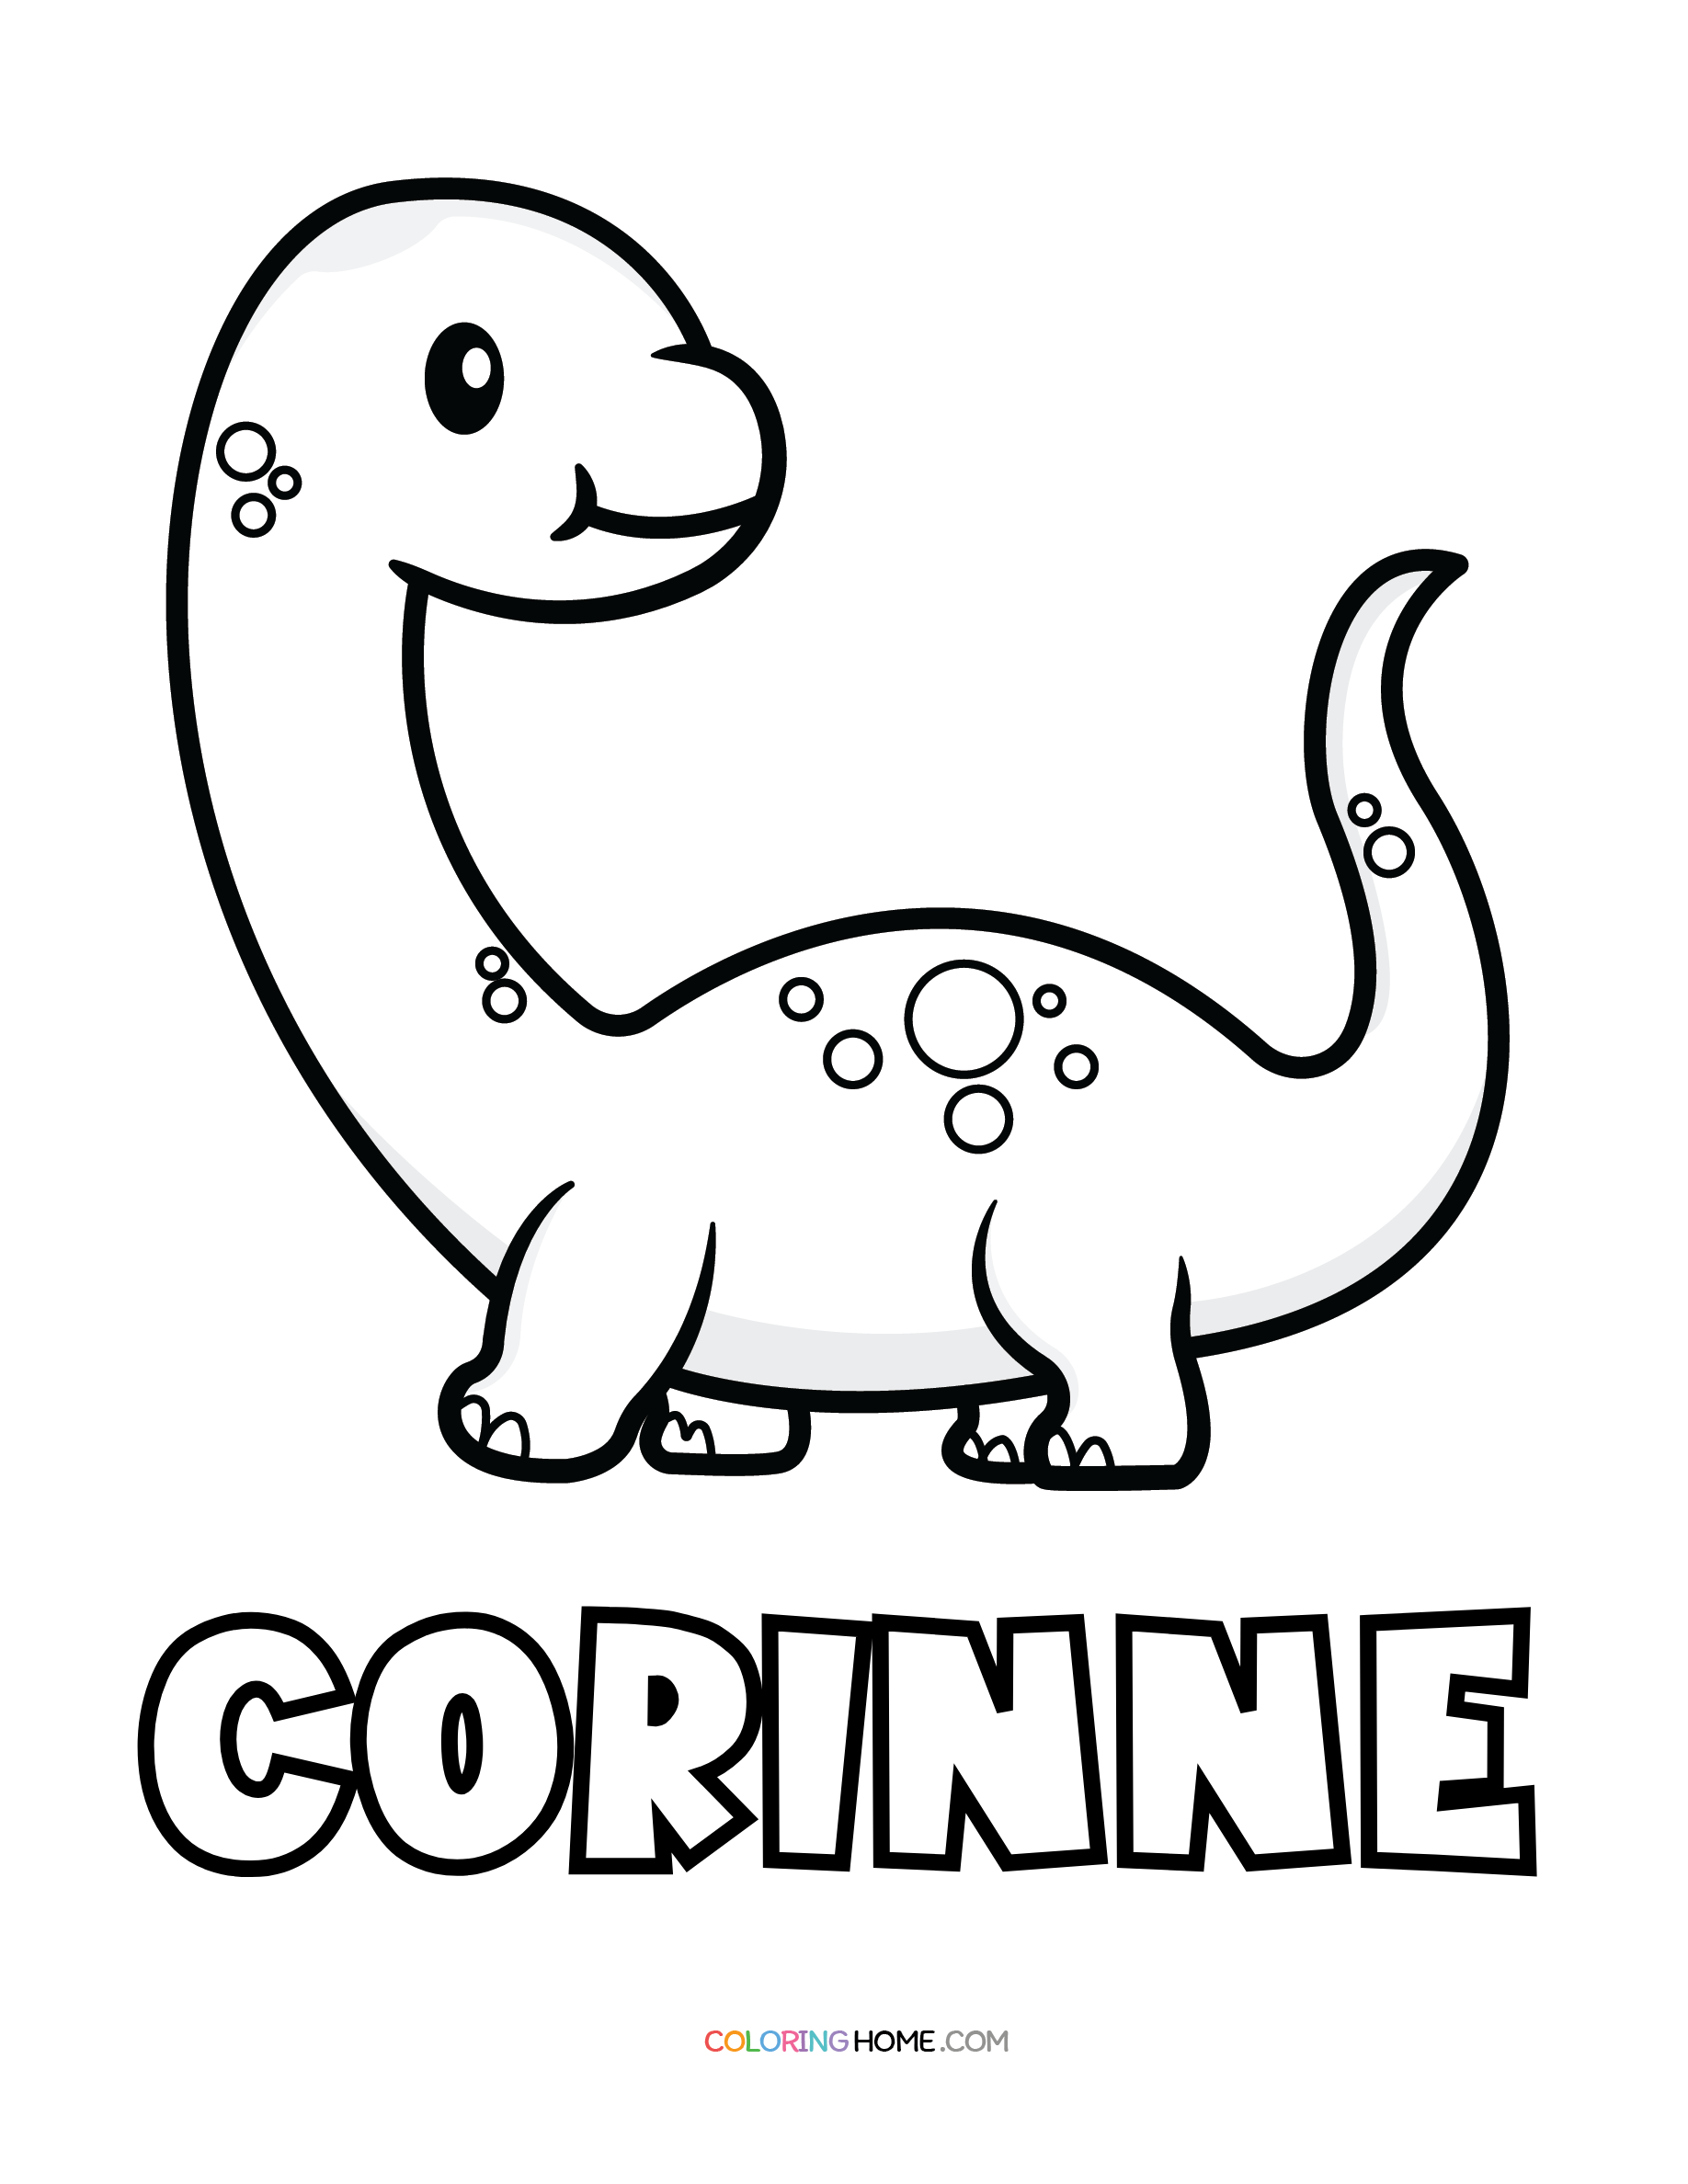 Corinne dinosaur coloring page